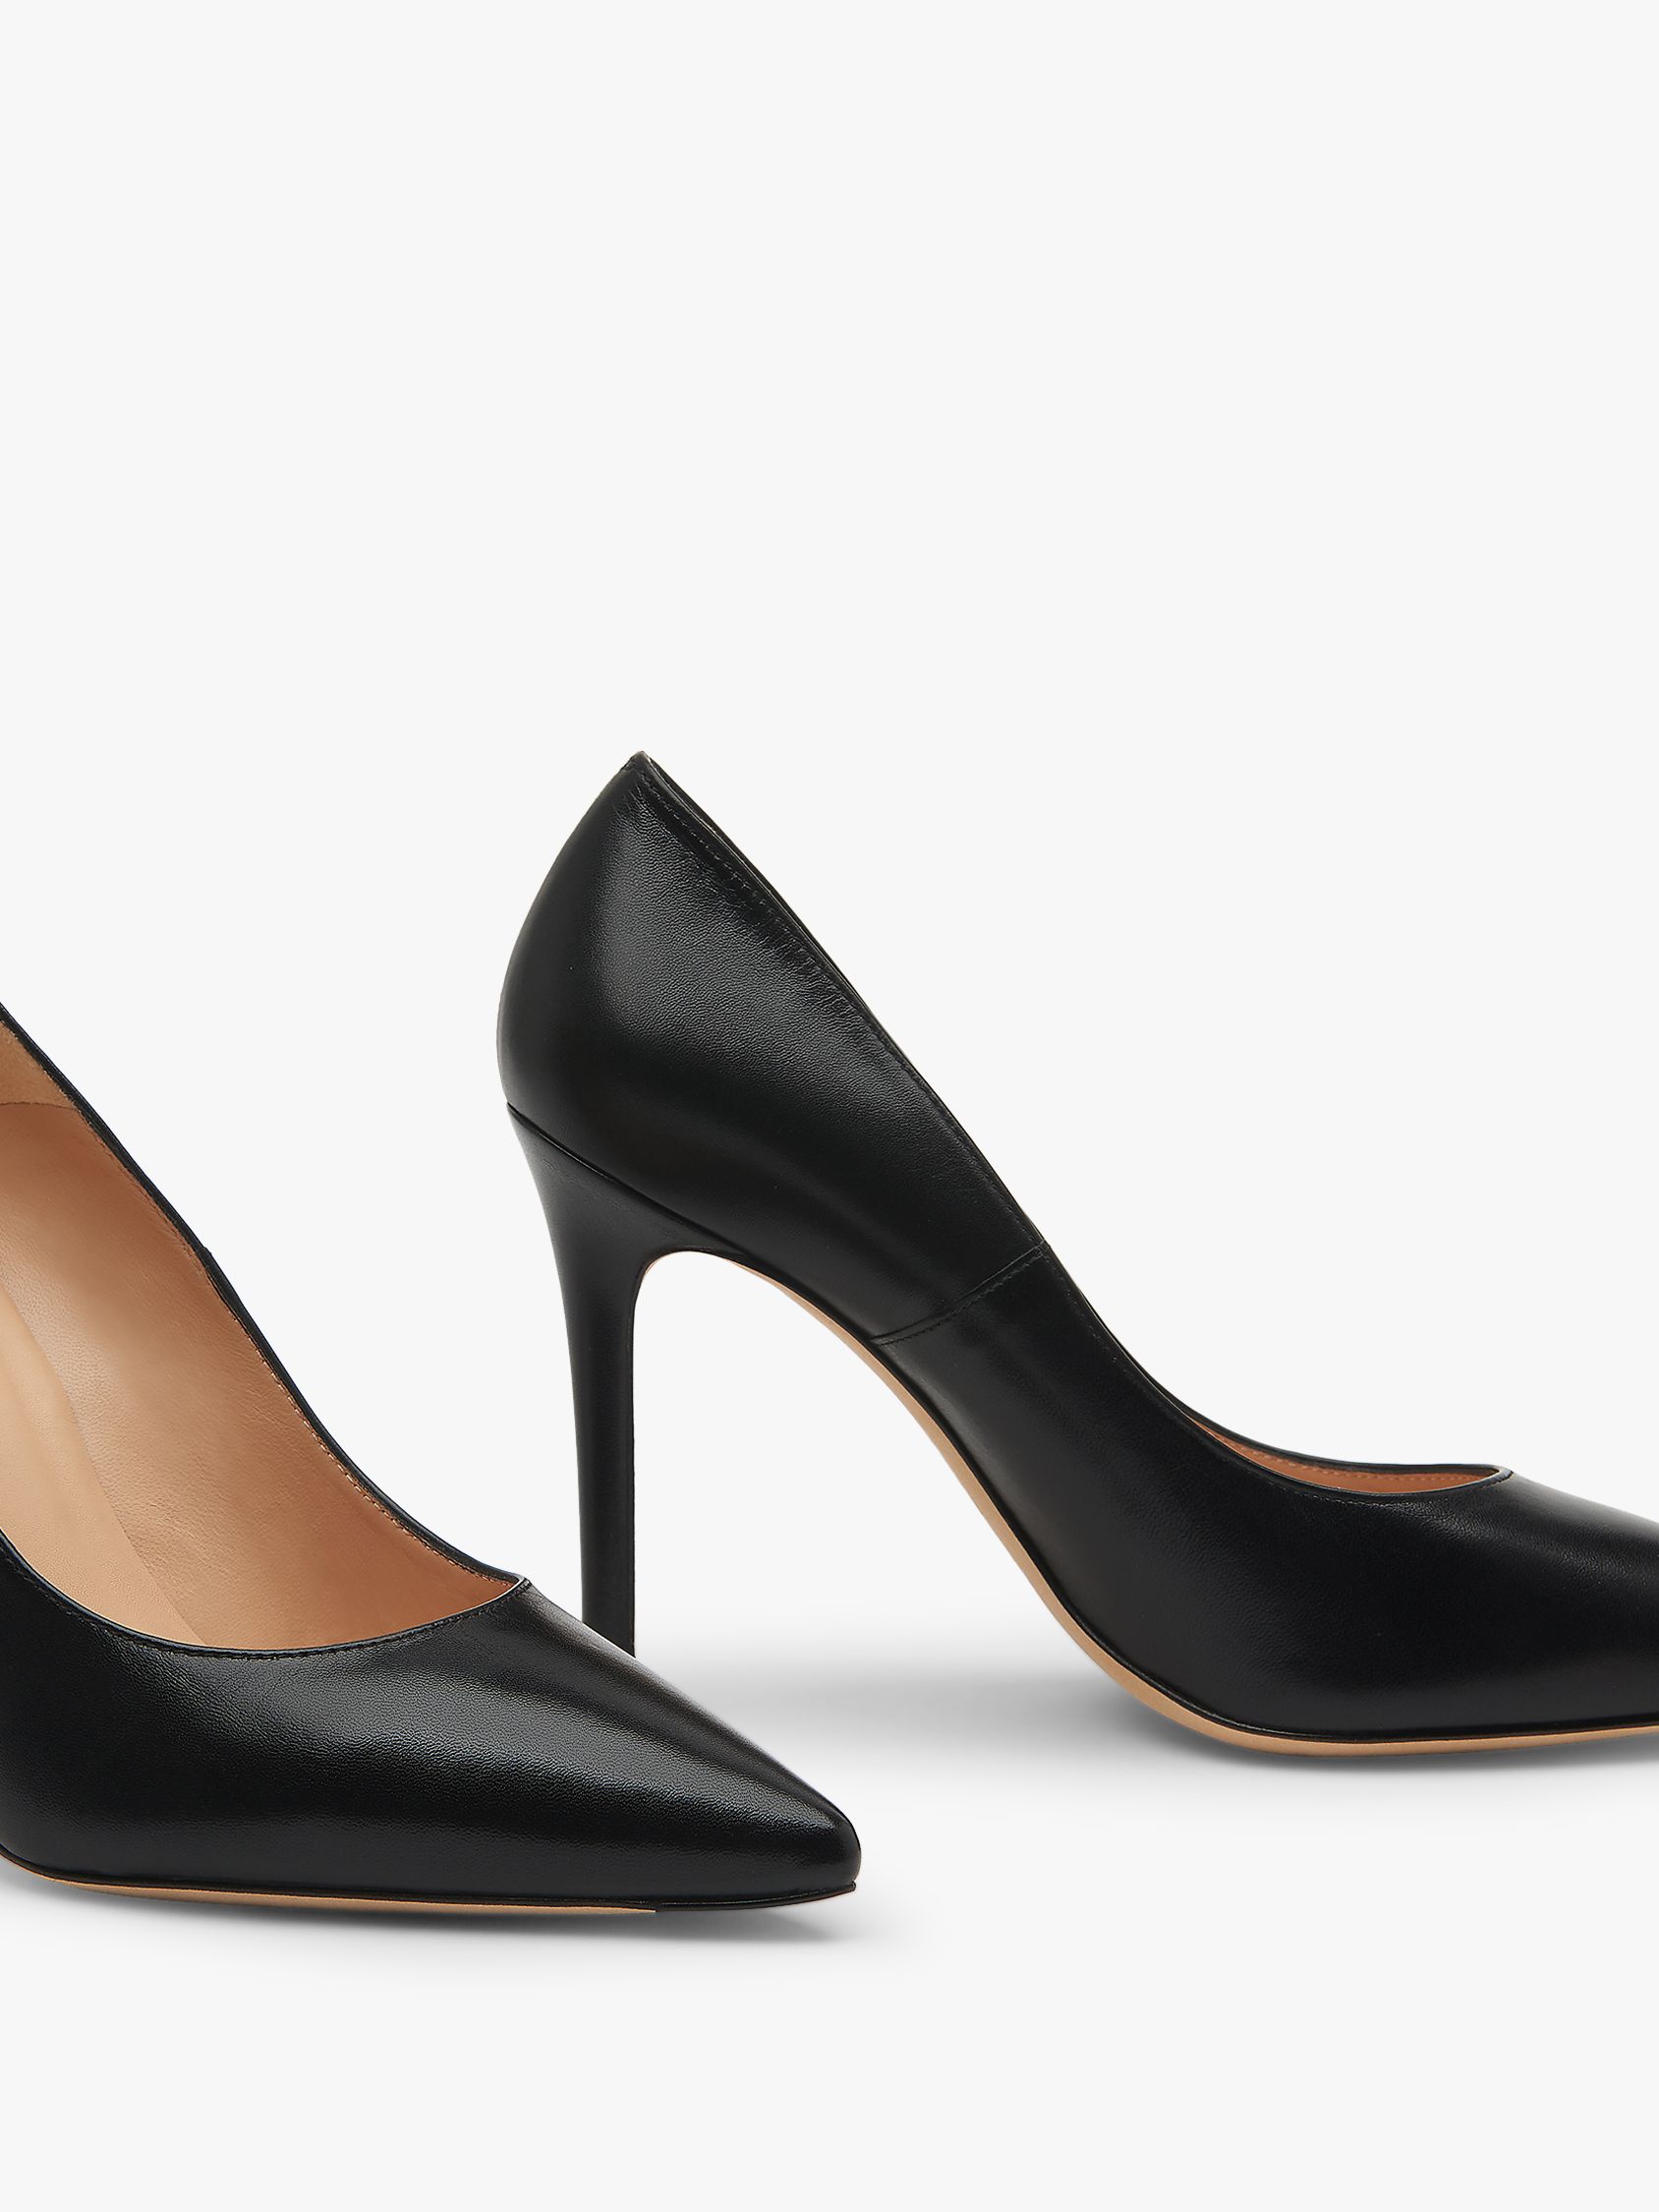 L.K.Bennett Fern Pointed Toe Leather Court Shoes, Black, 2